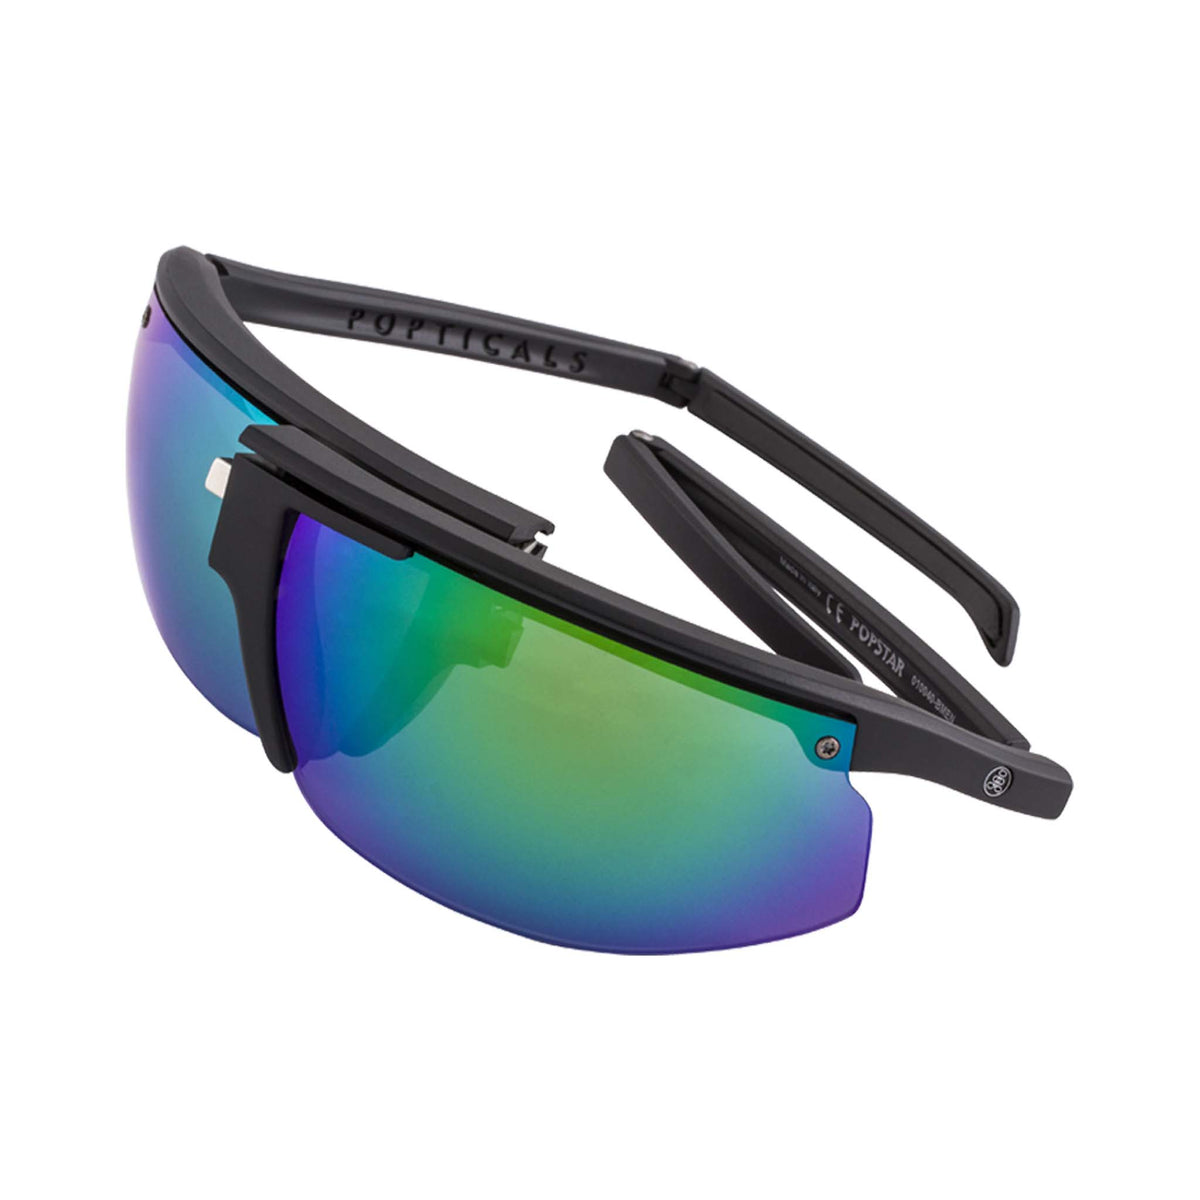 Popticals, Premium Compact Sunglasses, PopStar, 010040-BMEN, Polarized Sunglasses, Matte Black Frame, Gray Lenses w/Green Mirror Finish, Spider View